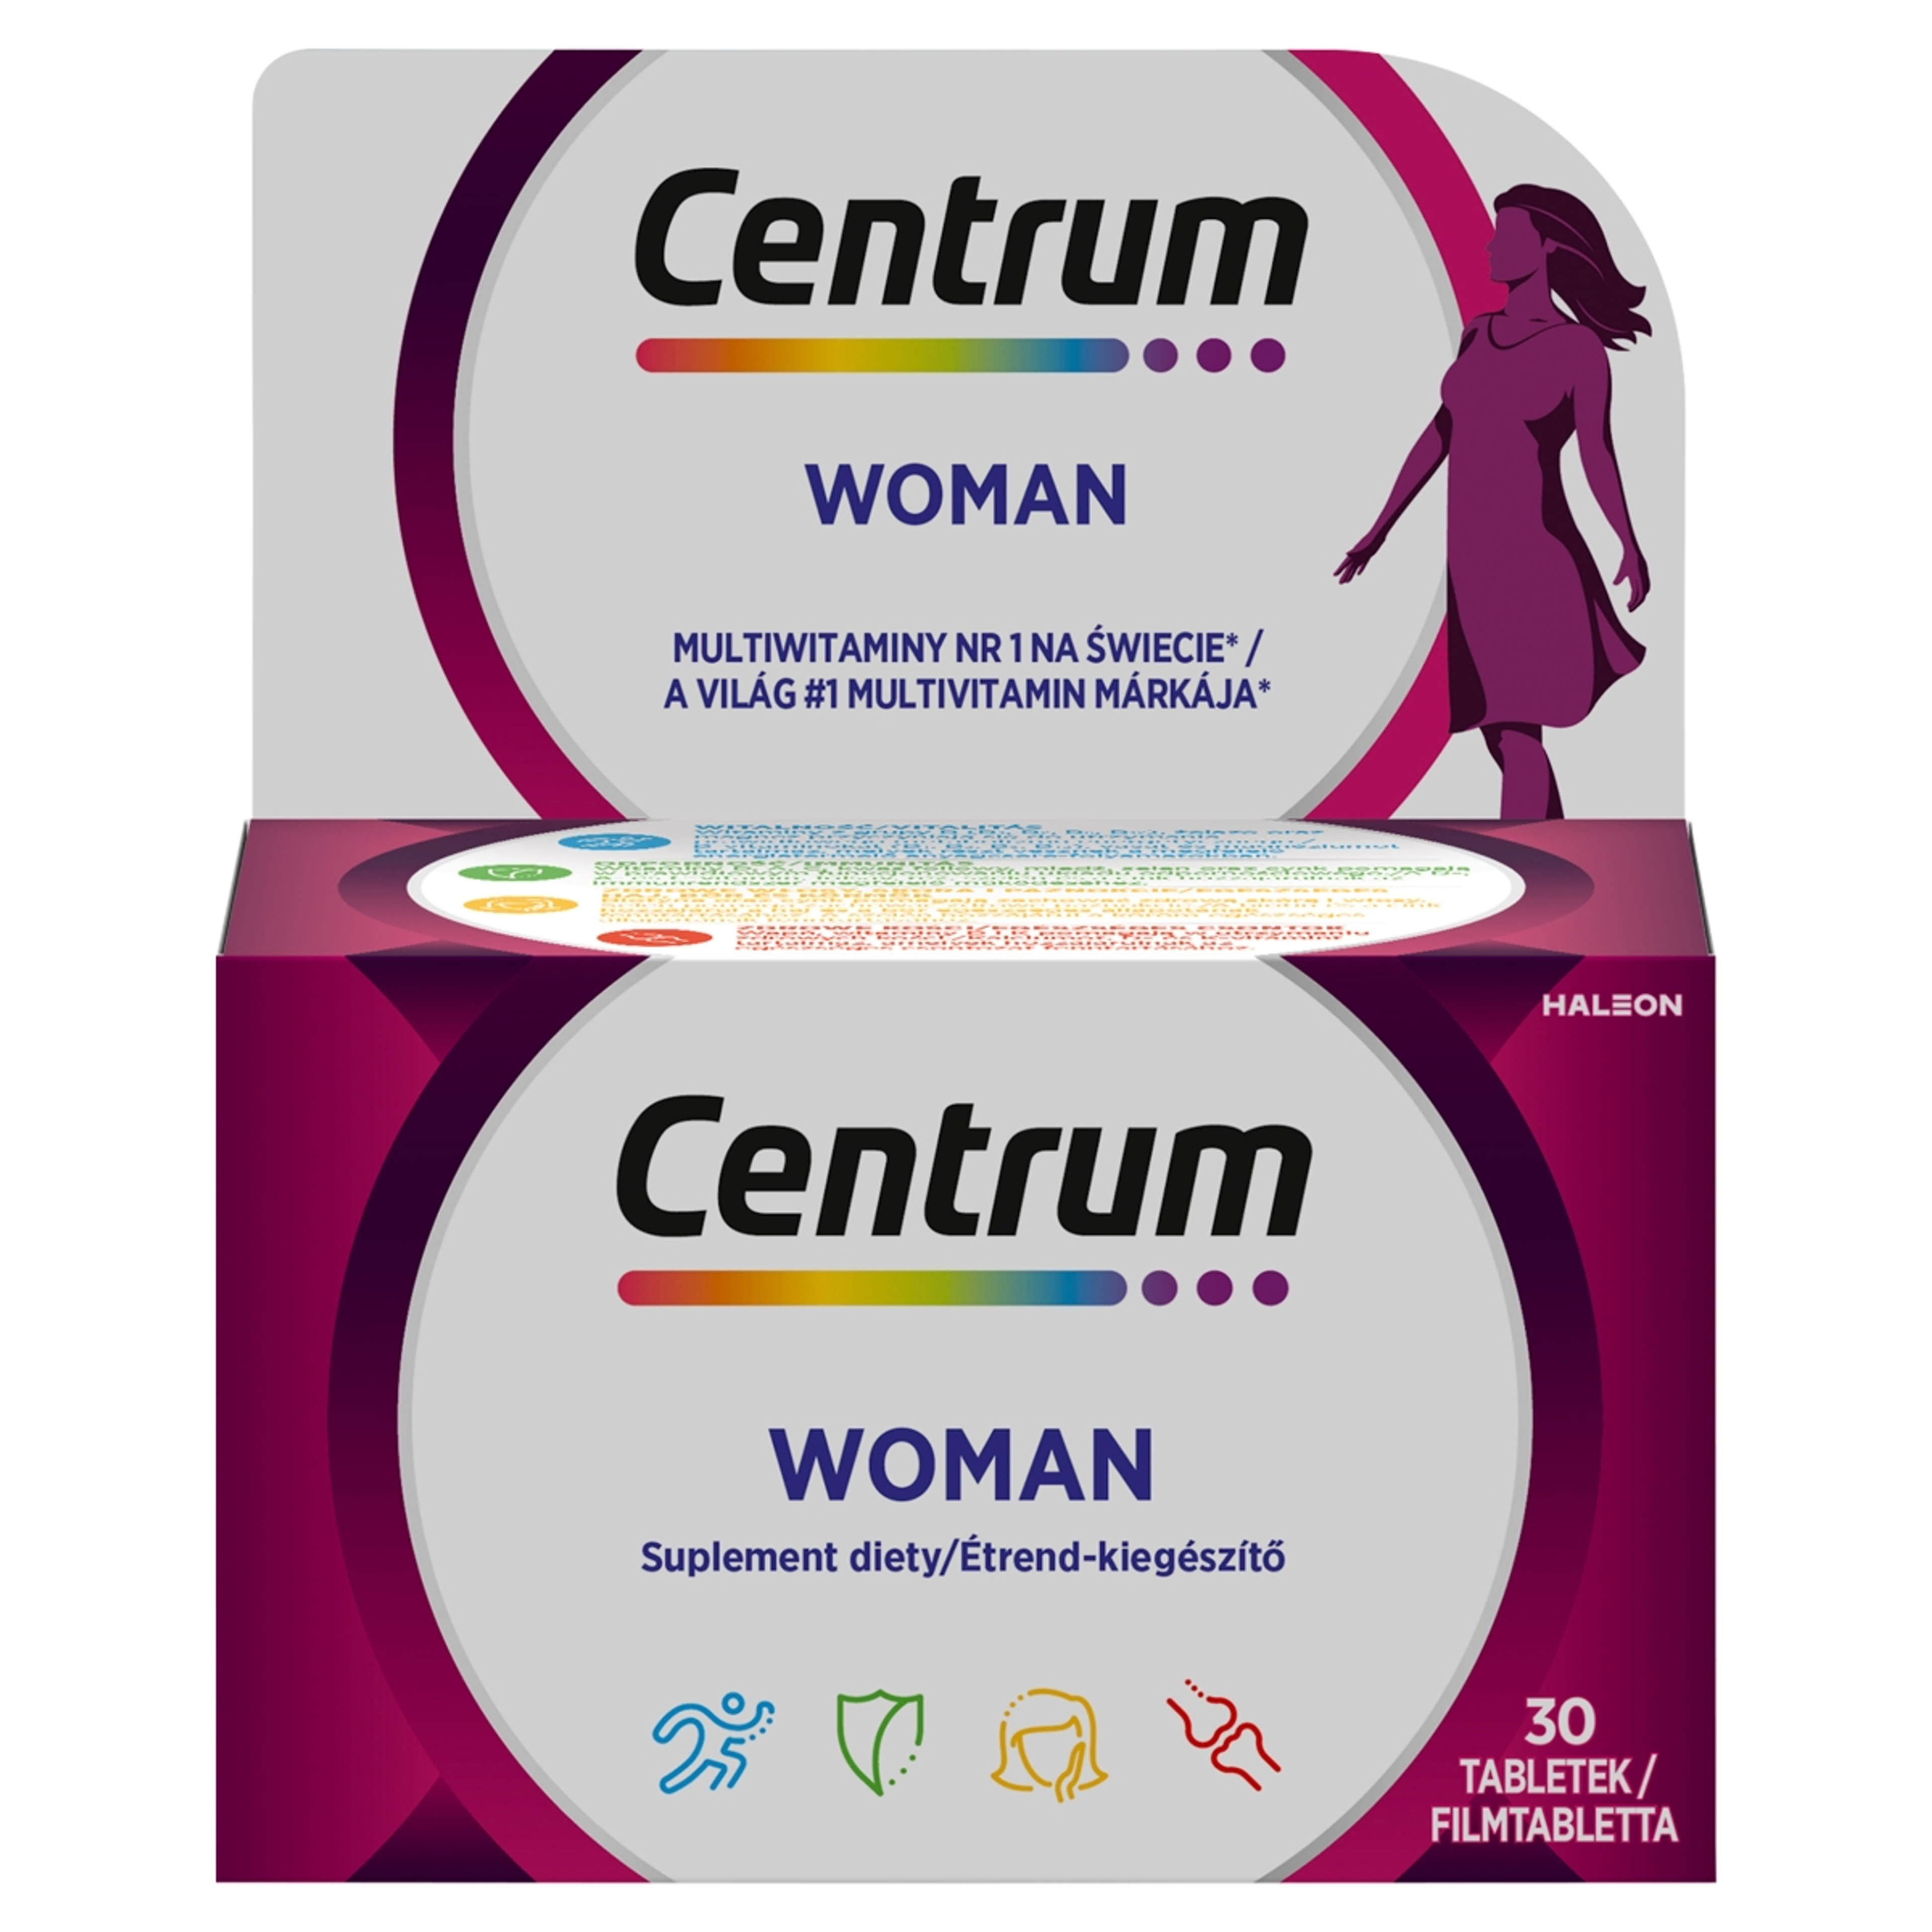 Centrum Nőknek A-tól Z-ig multivitamin tabletta - 30 db-1